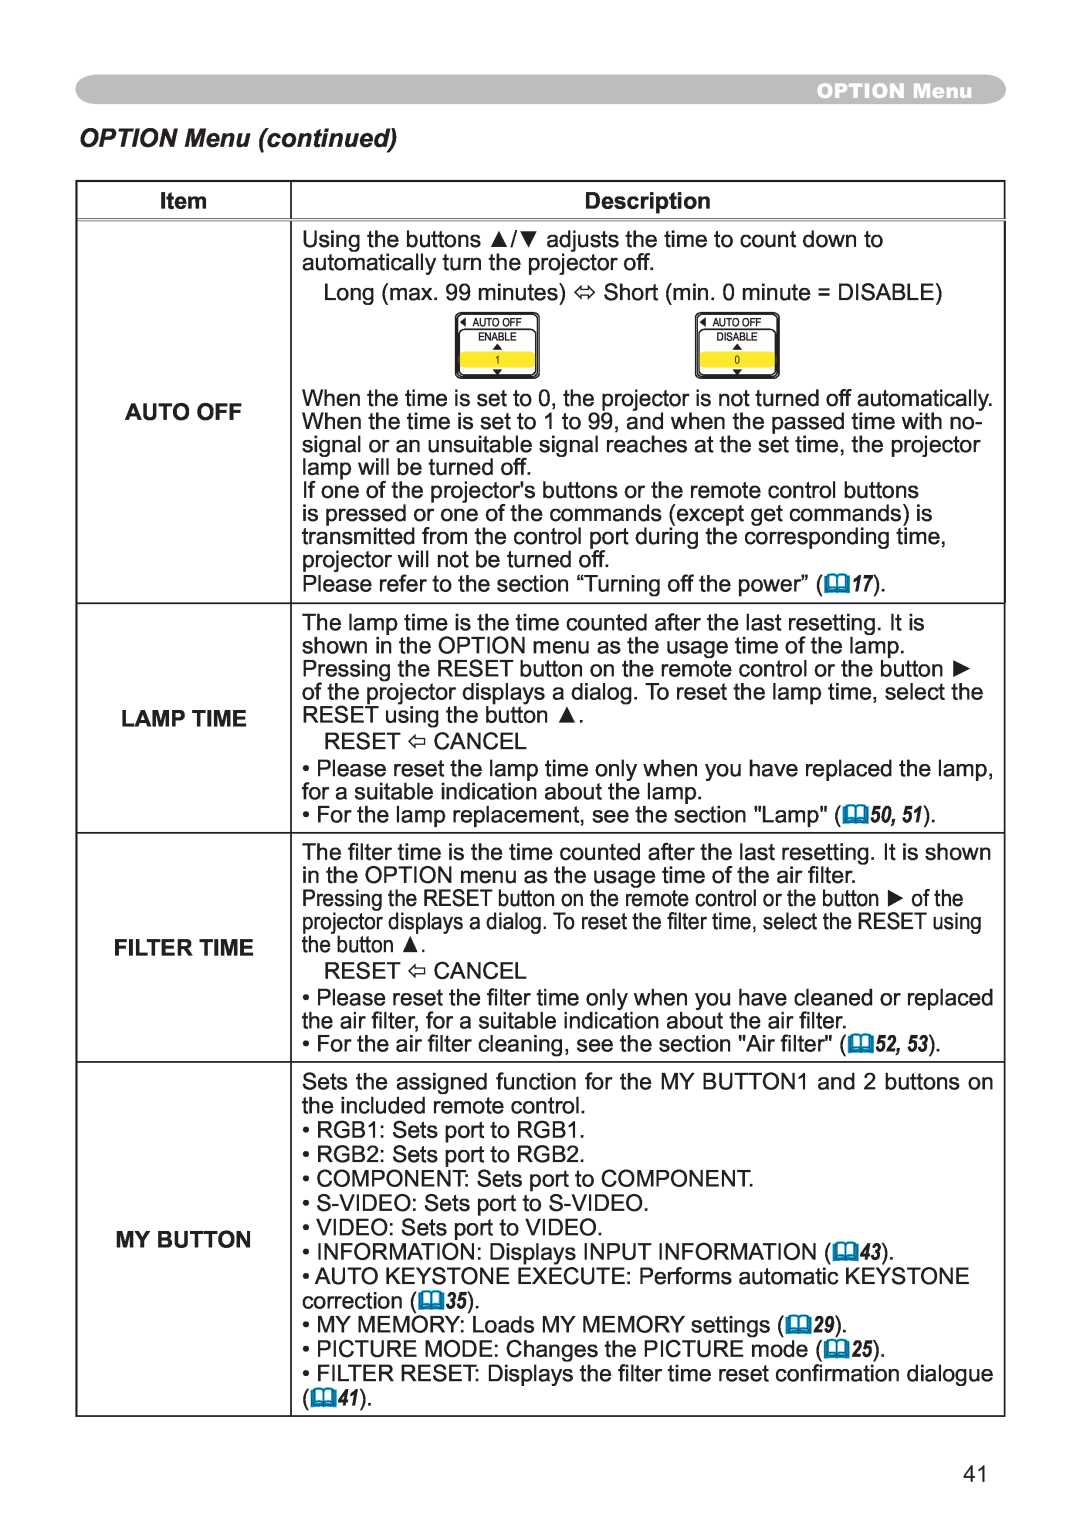 Hitachi CP-X251 user manual OPTION Menu continued, Description, Auto Off, Lamp Time, Filter Time, My Button 